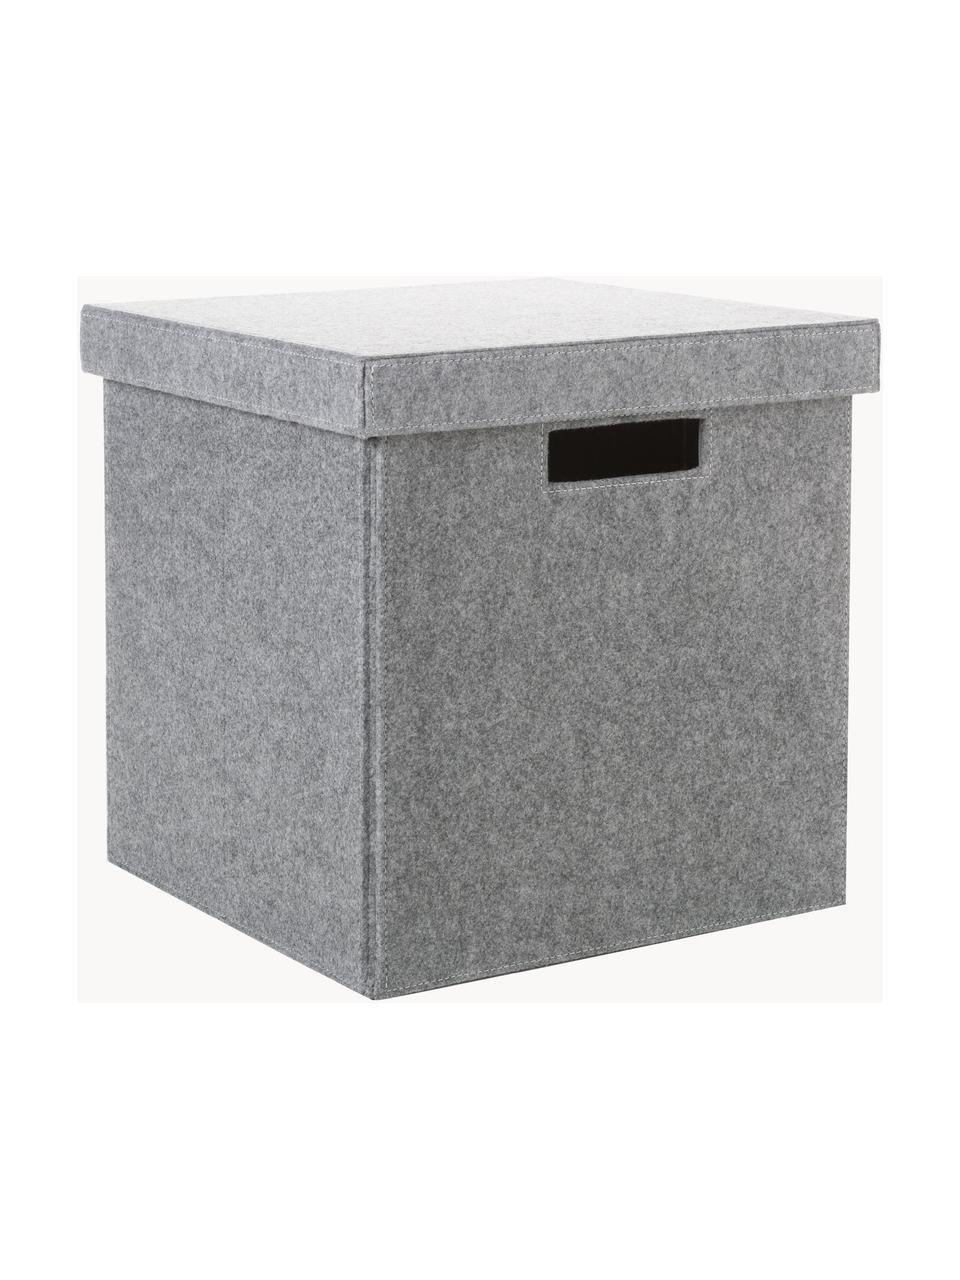 Aufbewahrungsbox Lena, Filz aus recyceltem Kunststoff, Grau, H 32 x B 32 cm